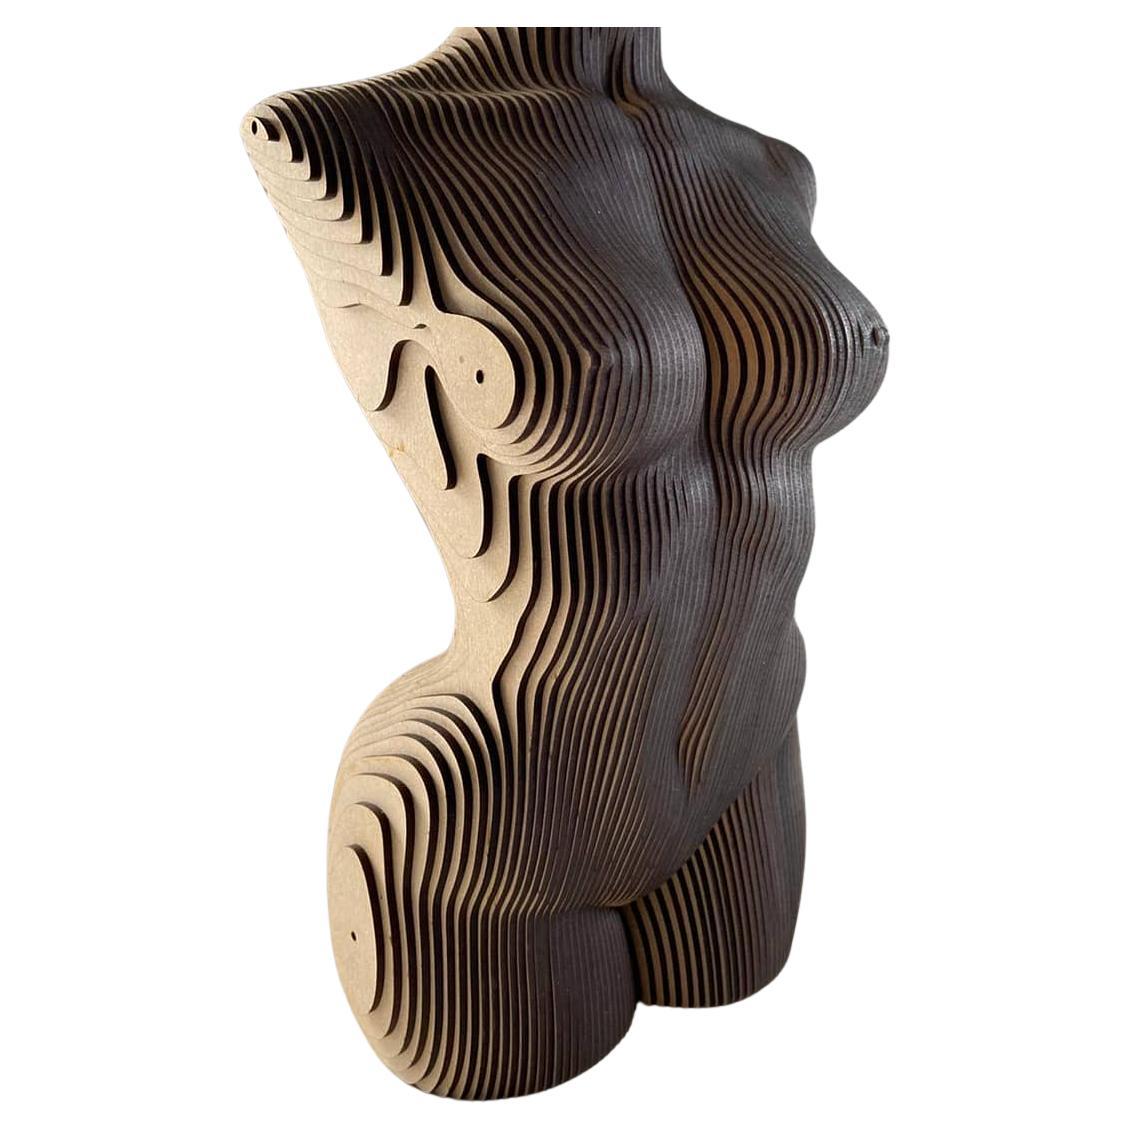 Wood Female Torso Sculpture Wood Furniture